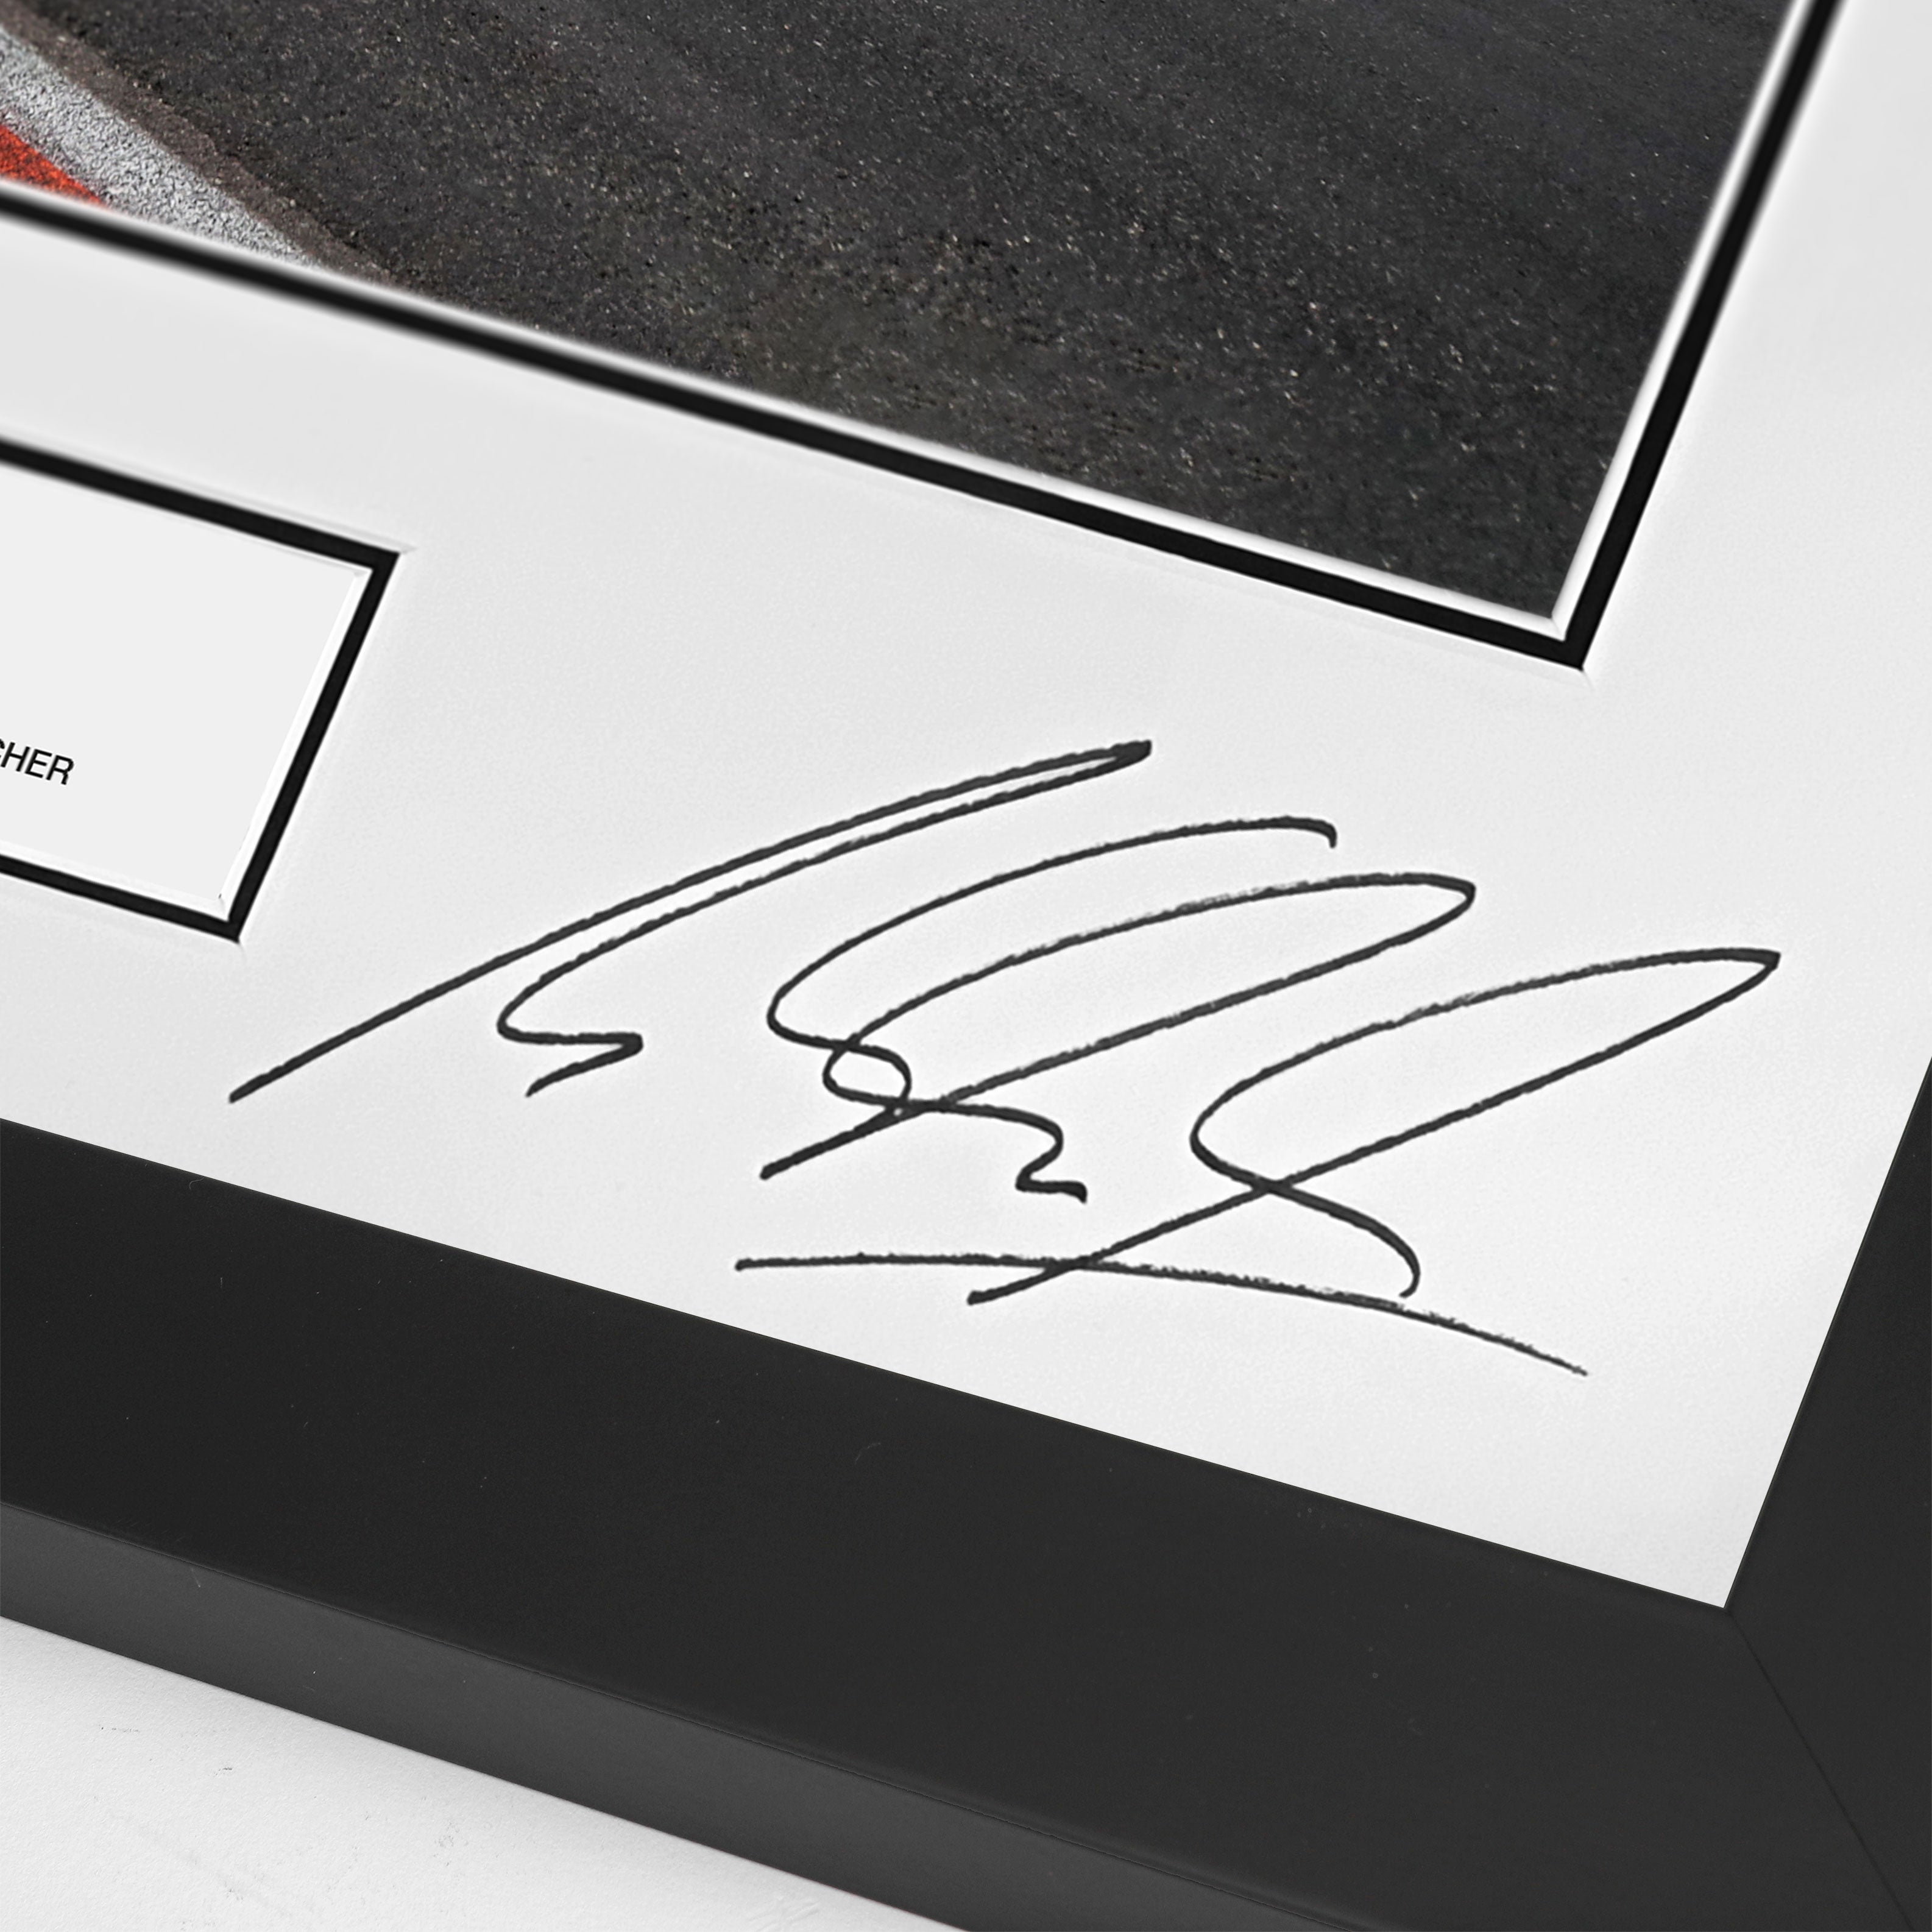 Kevin Magnussen & Mick Schumacher 2022 Dual Signed Photo - Miami GP